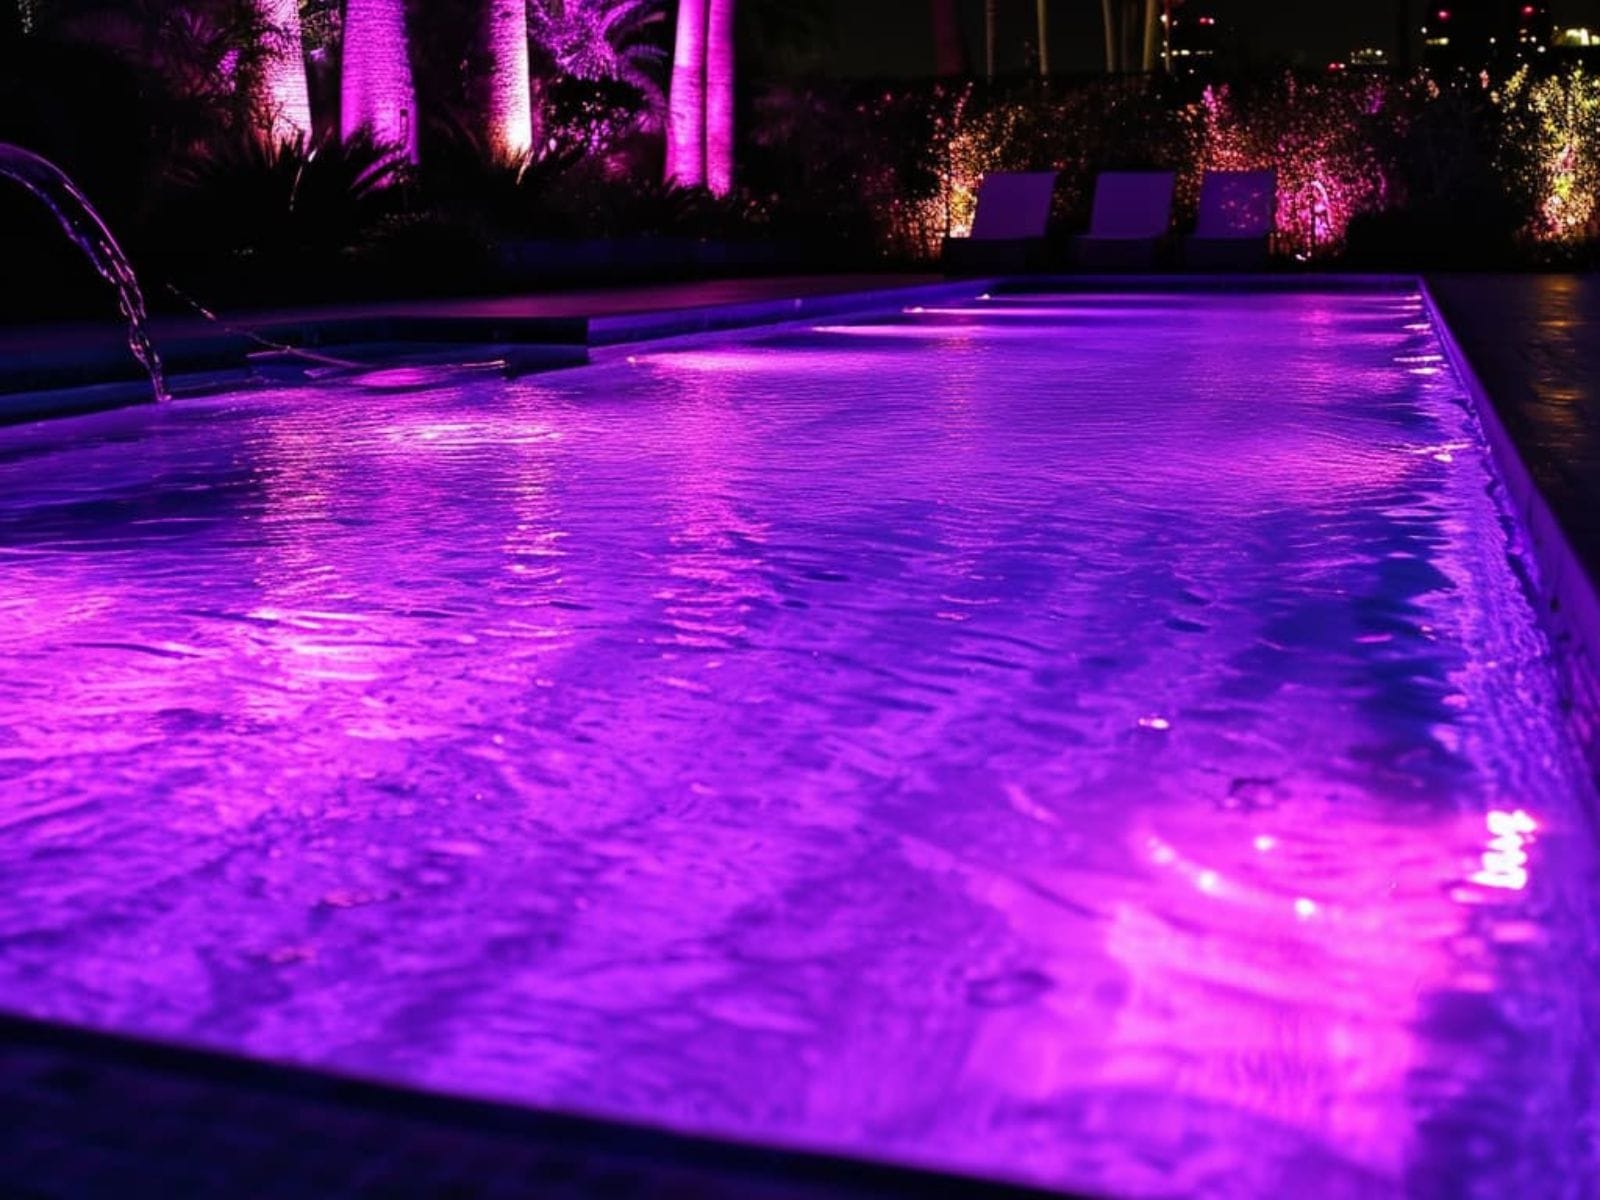 Underwater LED lights installed inside a backyard pool